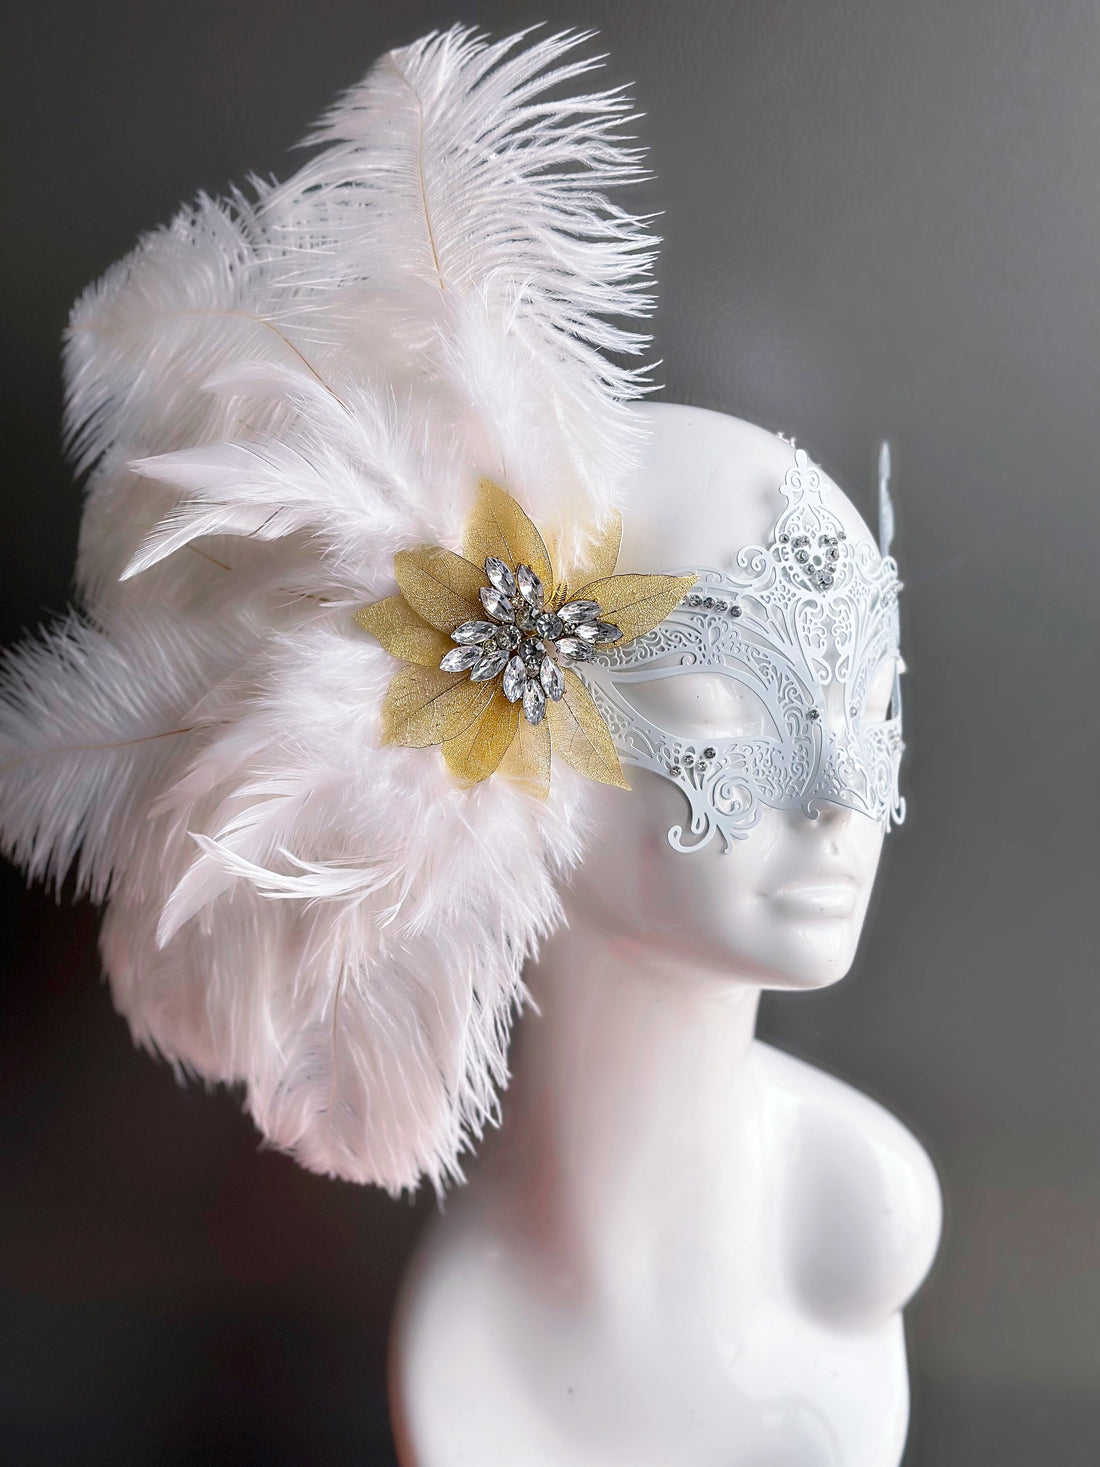 Luxury Feather Mask - White/Gold